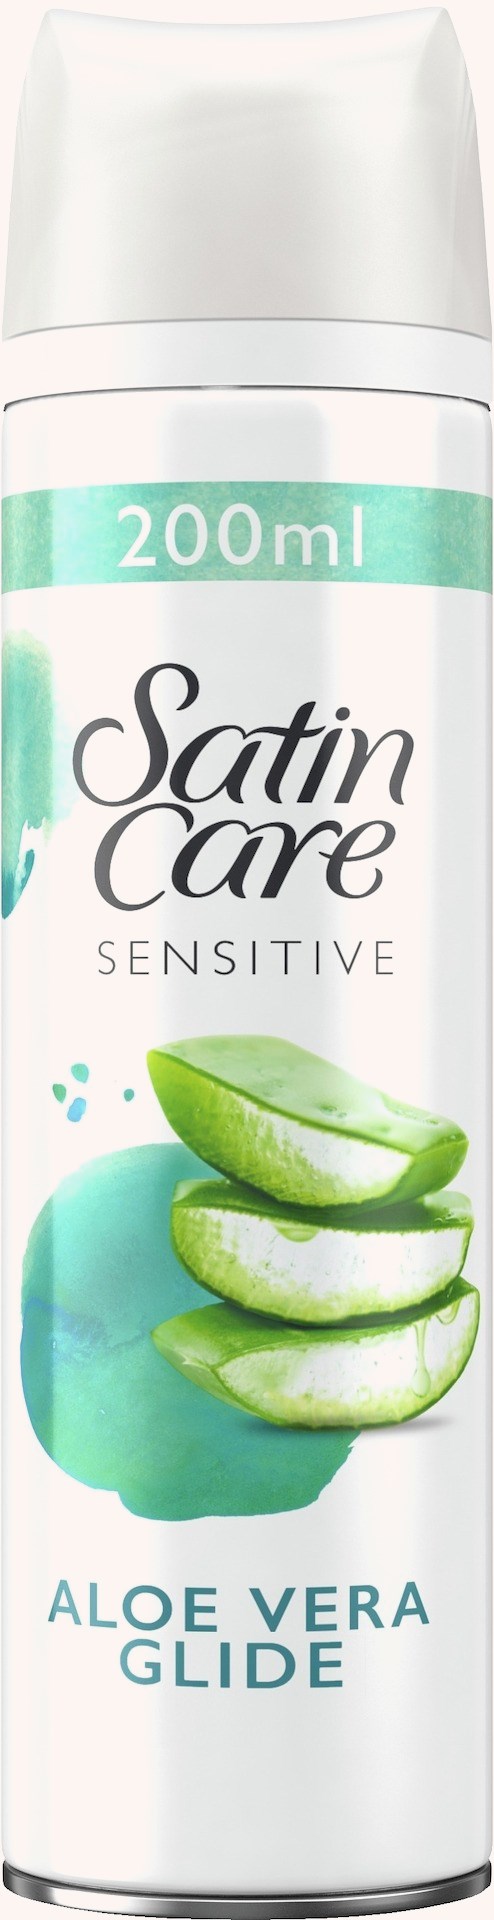 Satin Care Sensitive Skin Aloe Vera Glide 200 ml